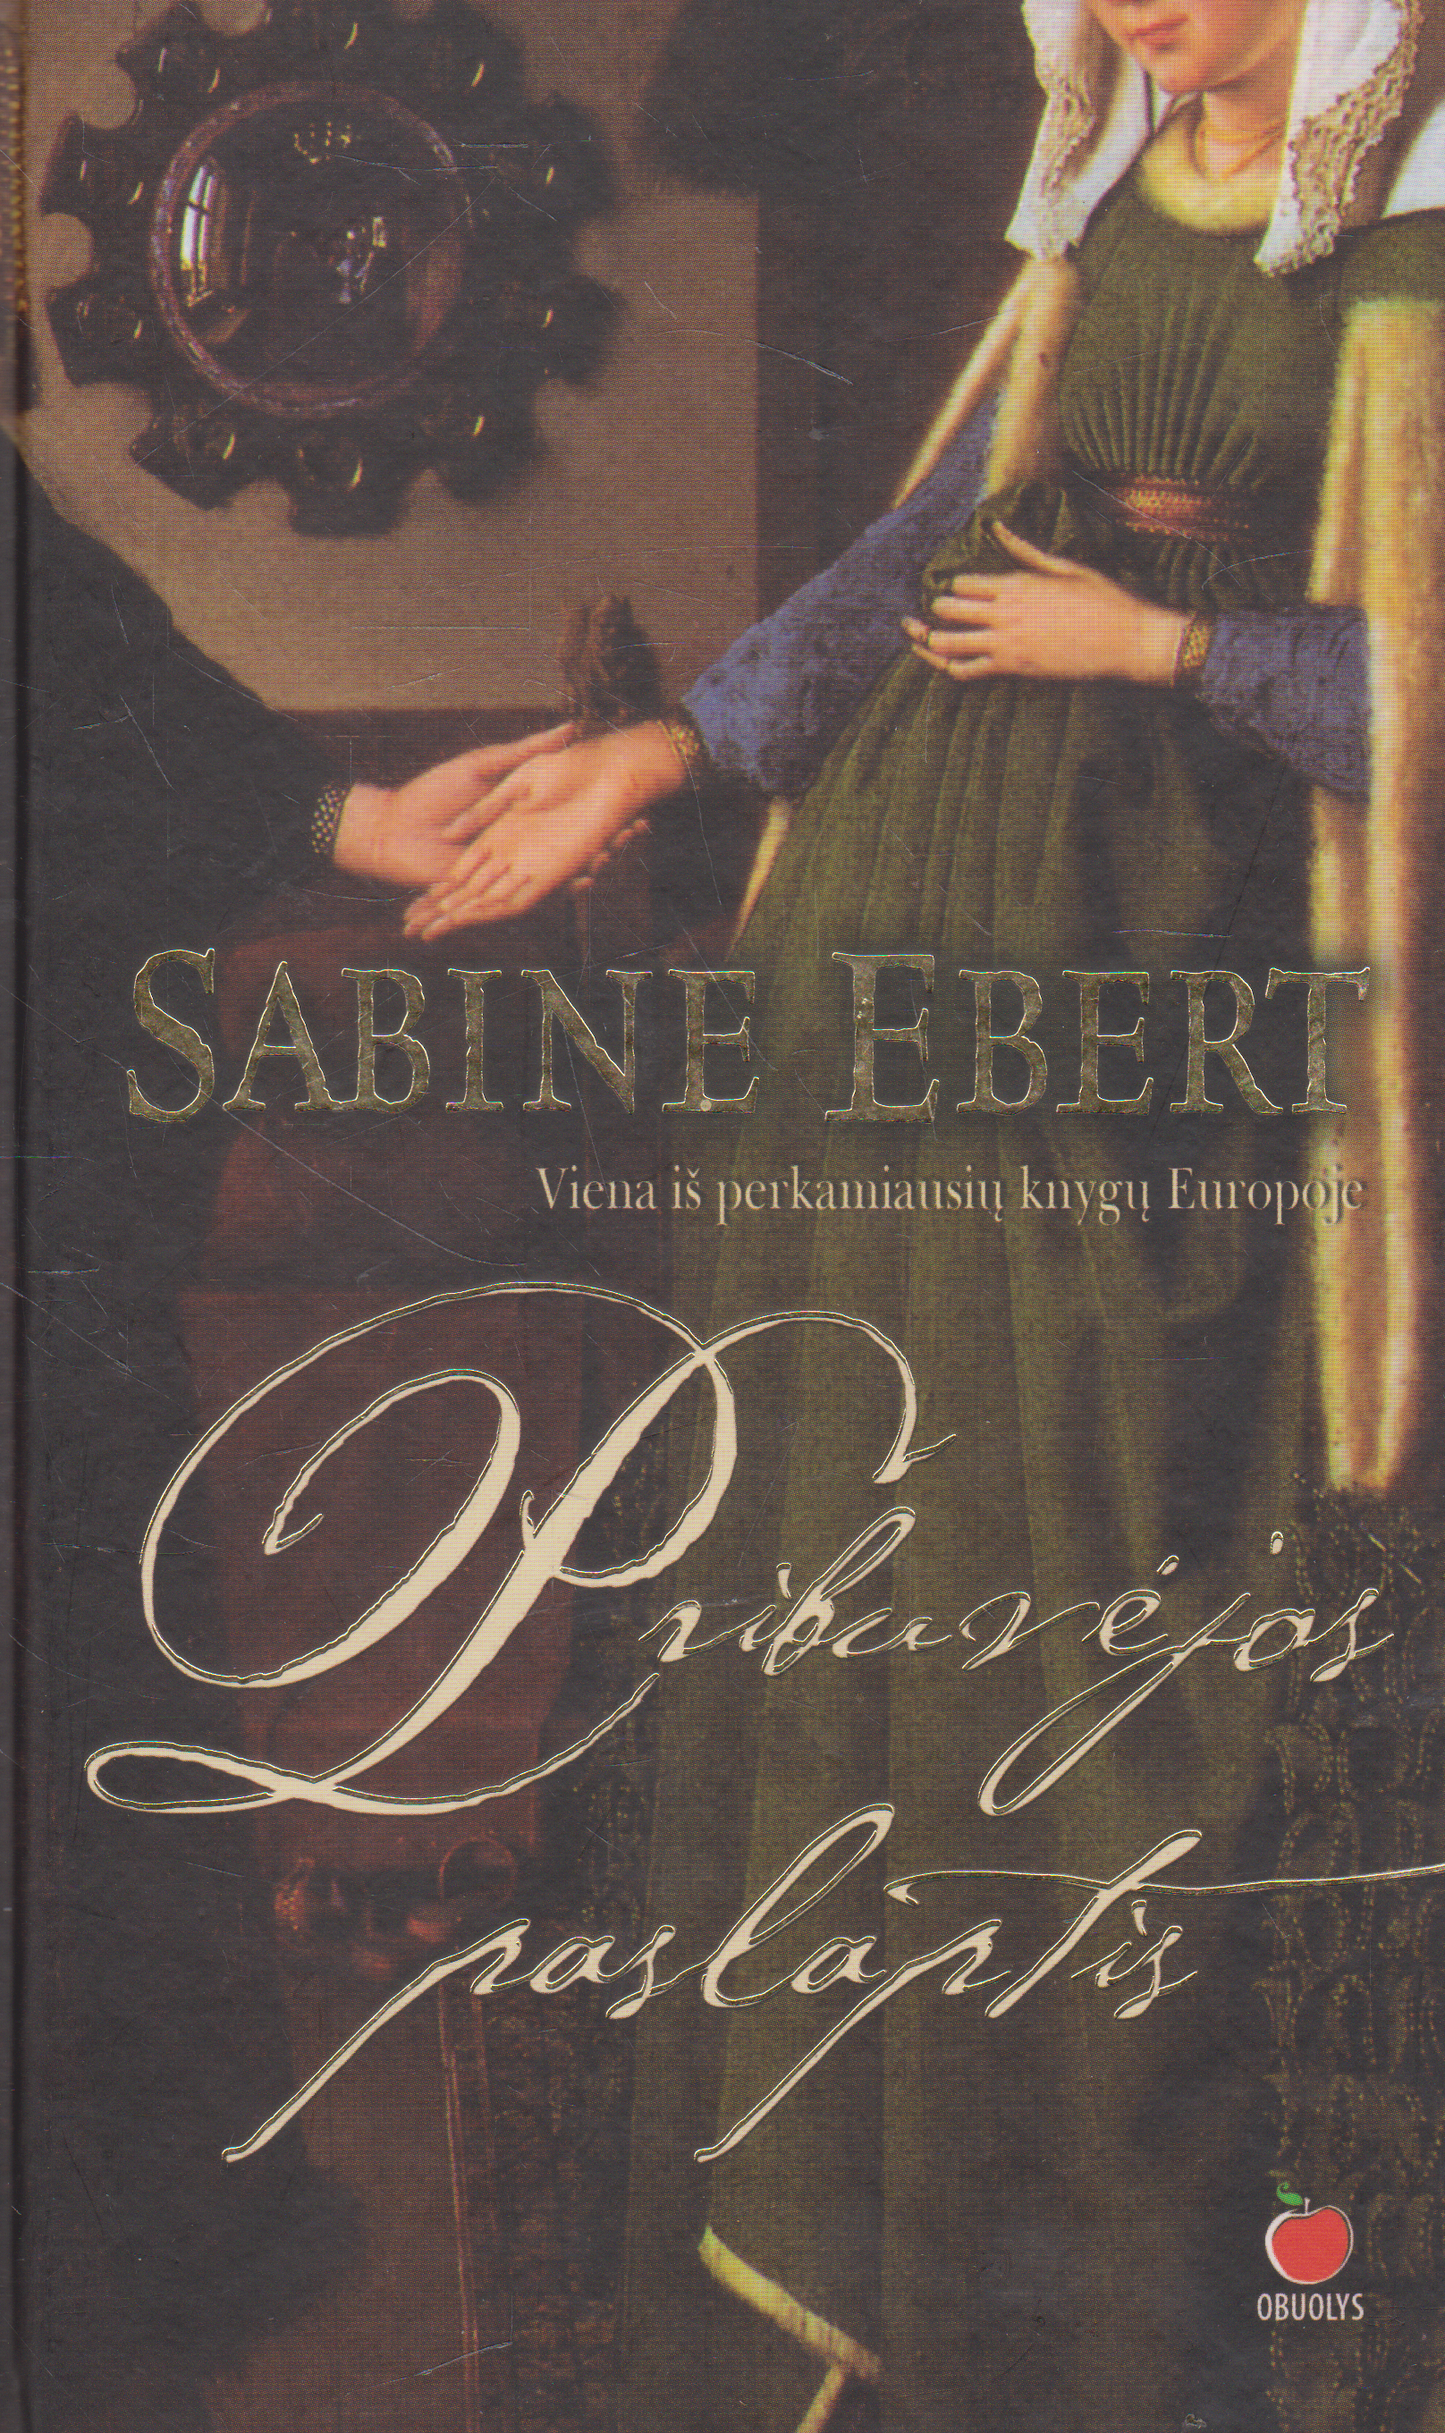 Sabine Ebert - Pribuvėjos paslaptis